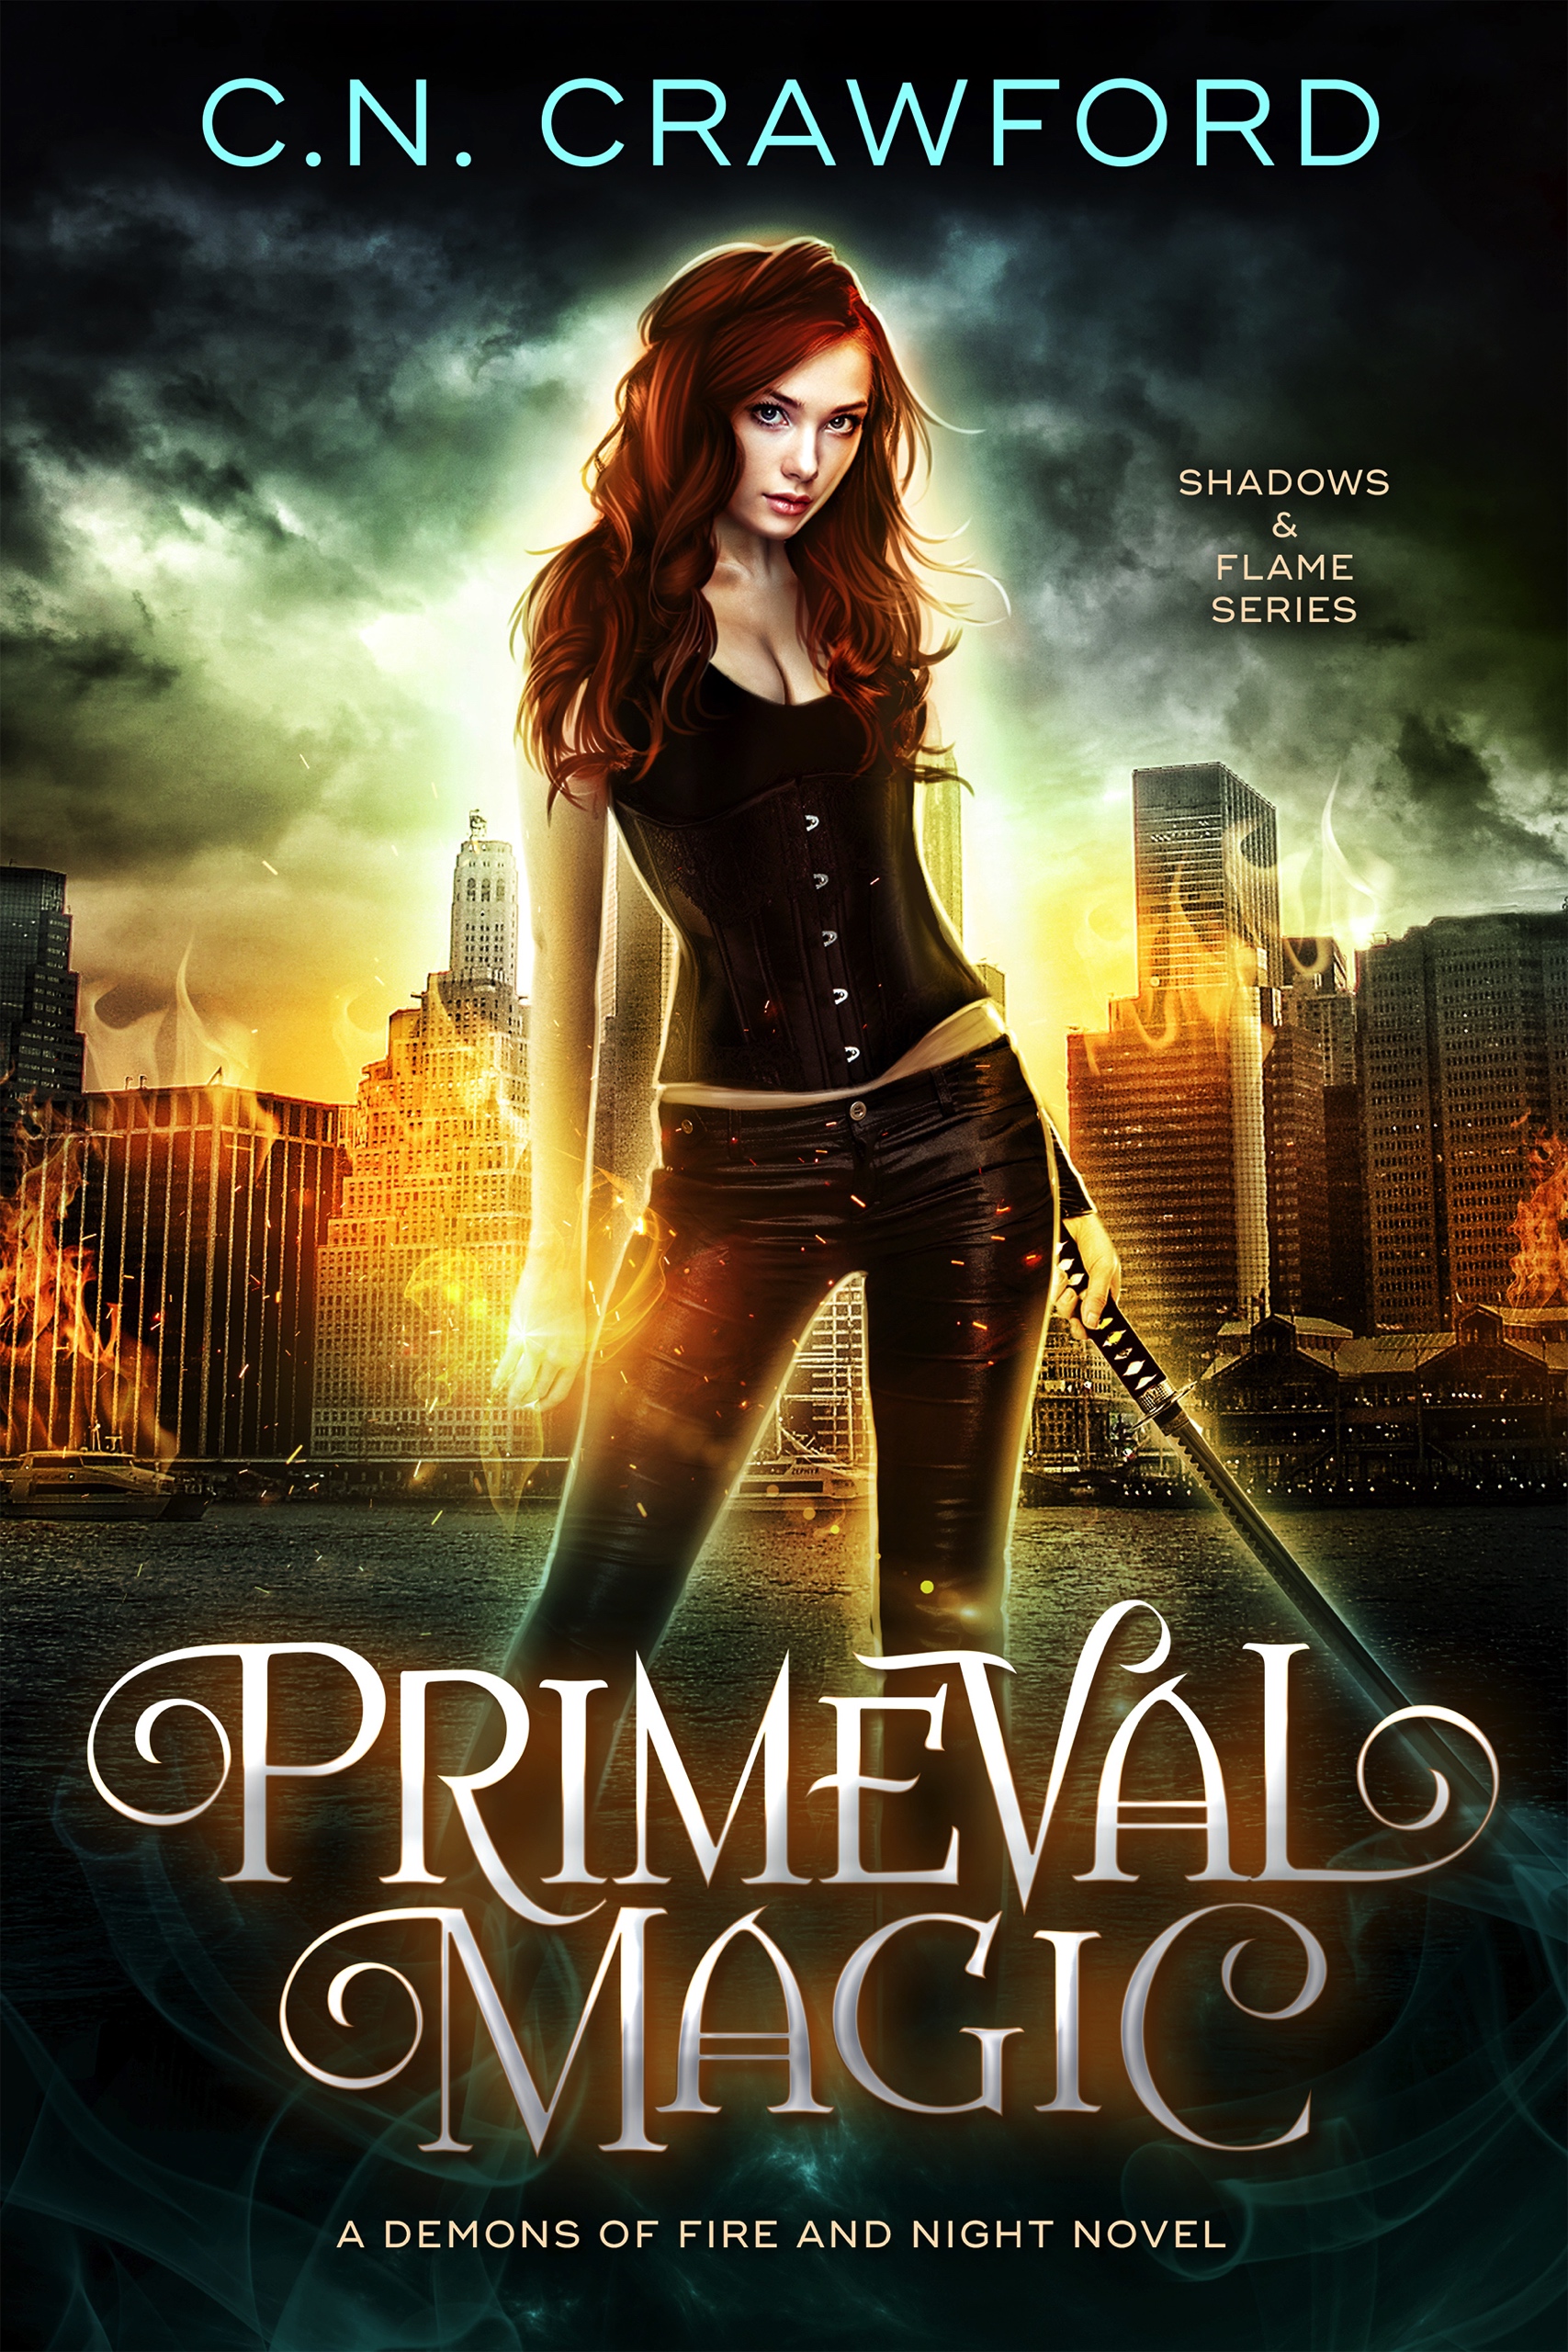 Book 3: Primeval Magic